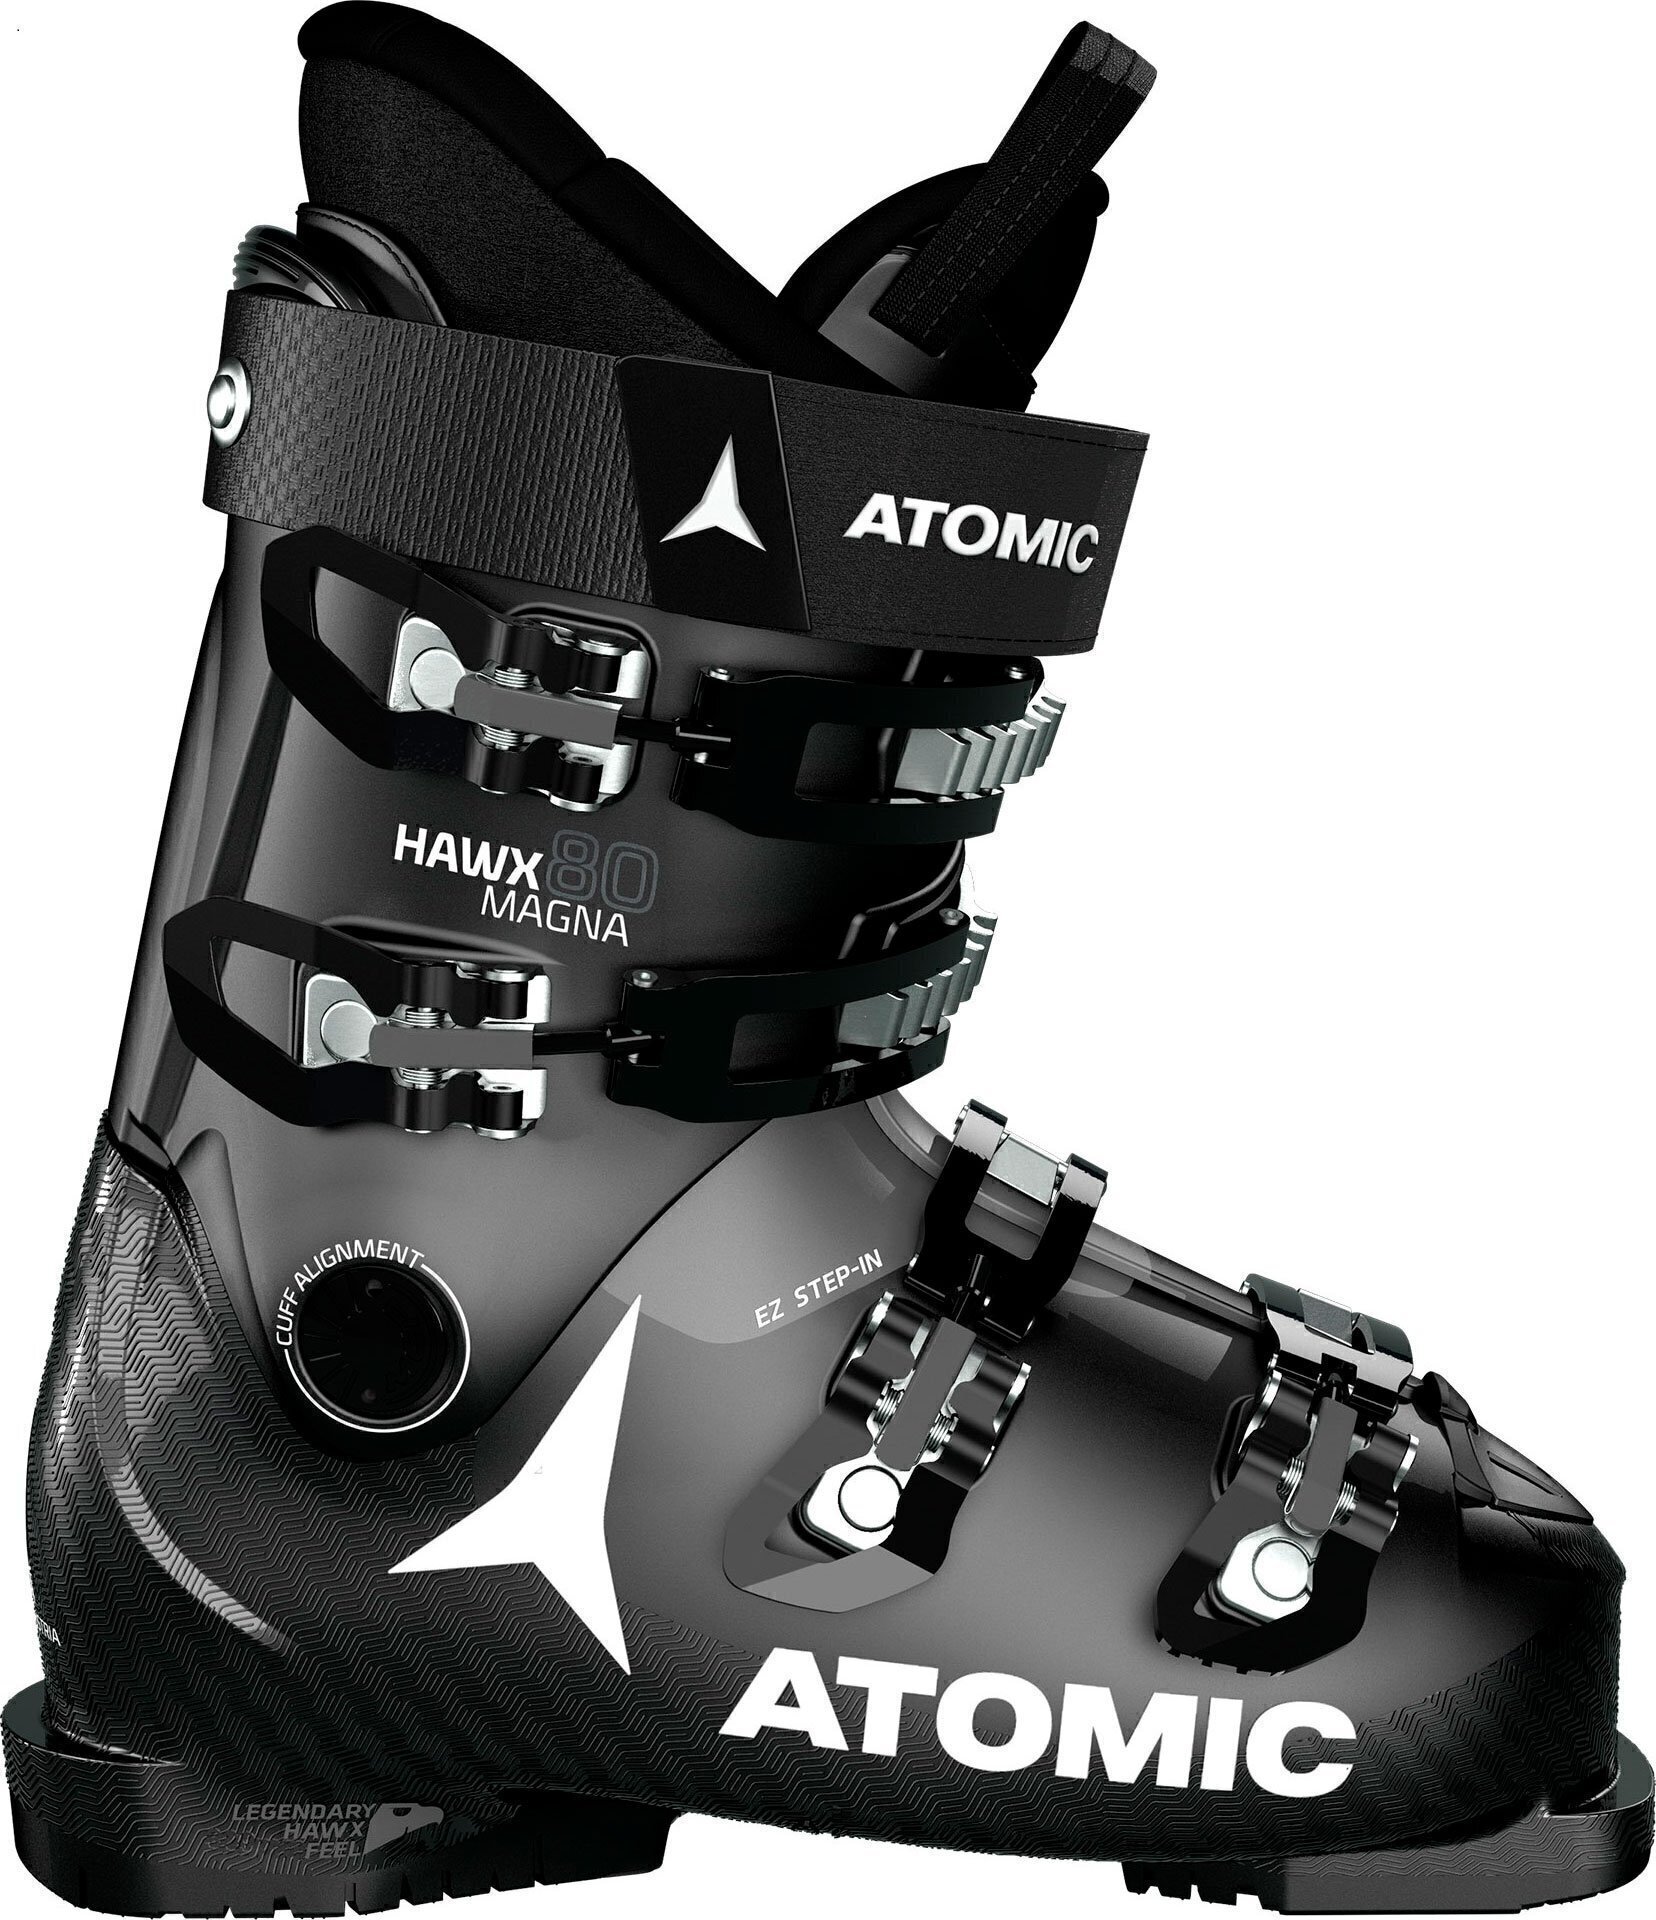 Ботинки ATOMIC HAWX MAGNA 80 (21/22) Black-Аnthracite